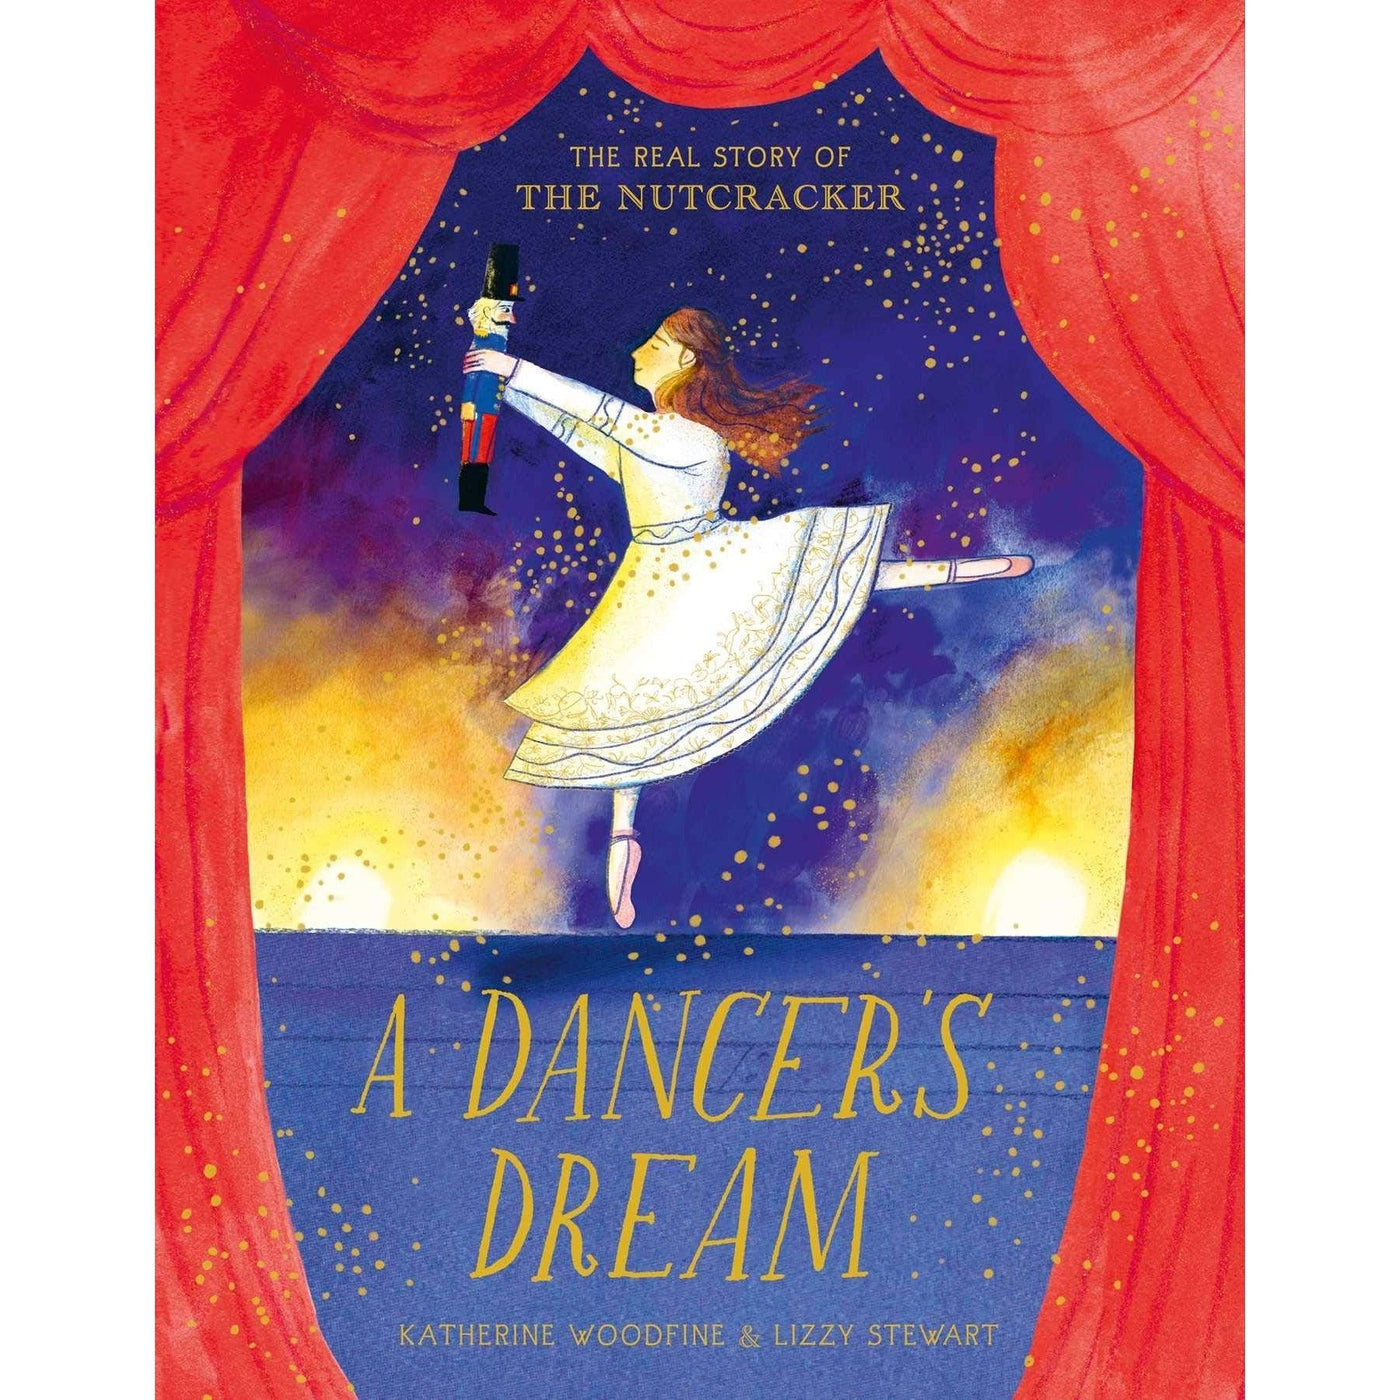 A Dancer's Dream - Katherine Woodfine & Lizzy Stewart